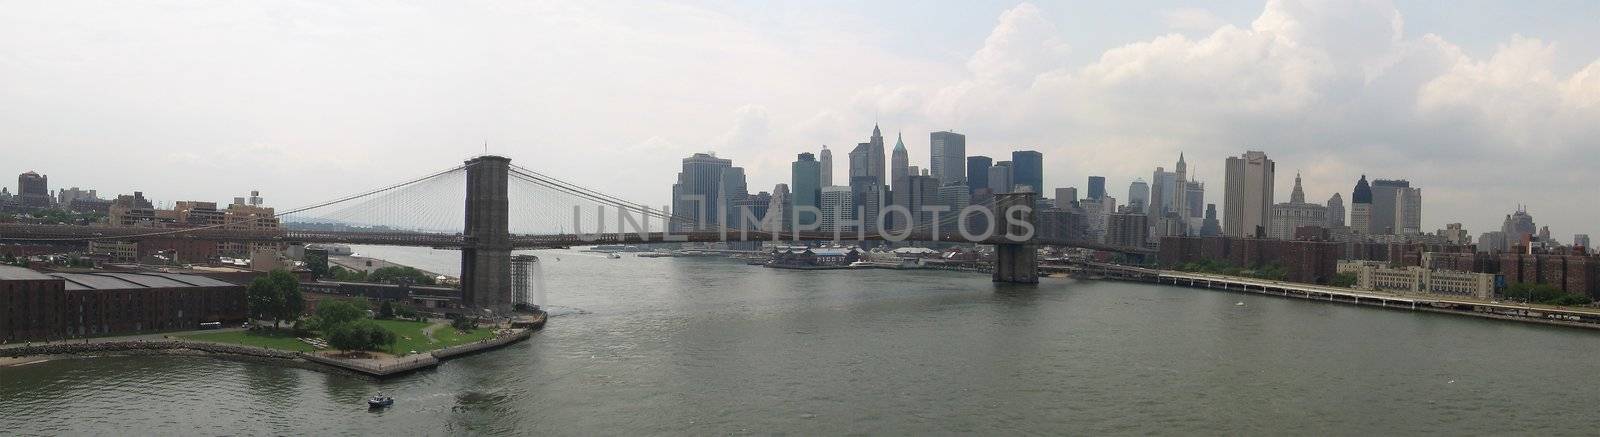 brooklyn bridge panorama by rorem